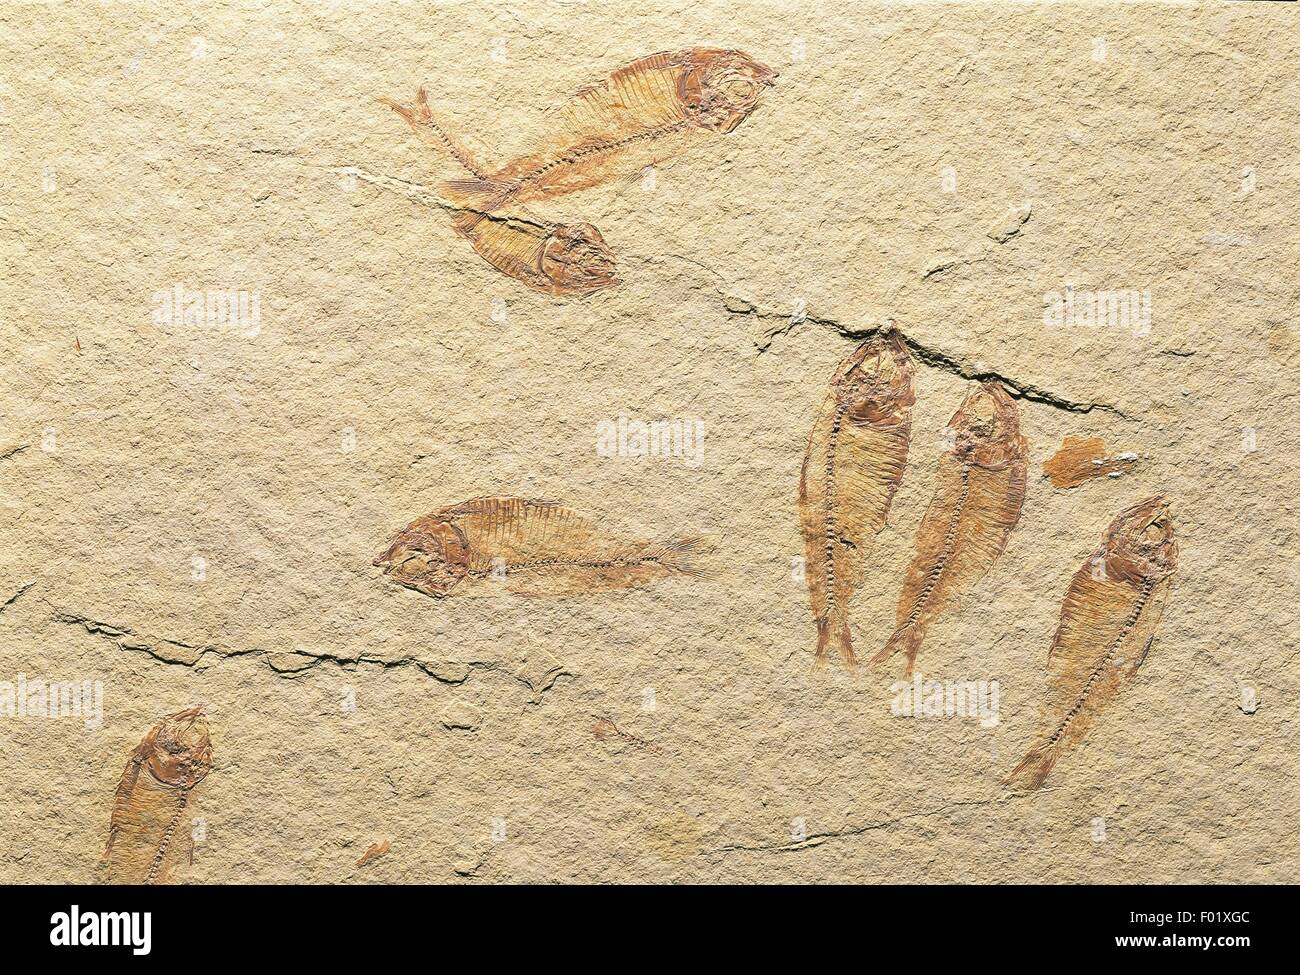 Fossils - Deuterostomia - Chordata - Actinopterygii - Knightia - Eocene - United States of America. Stock Photo